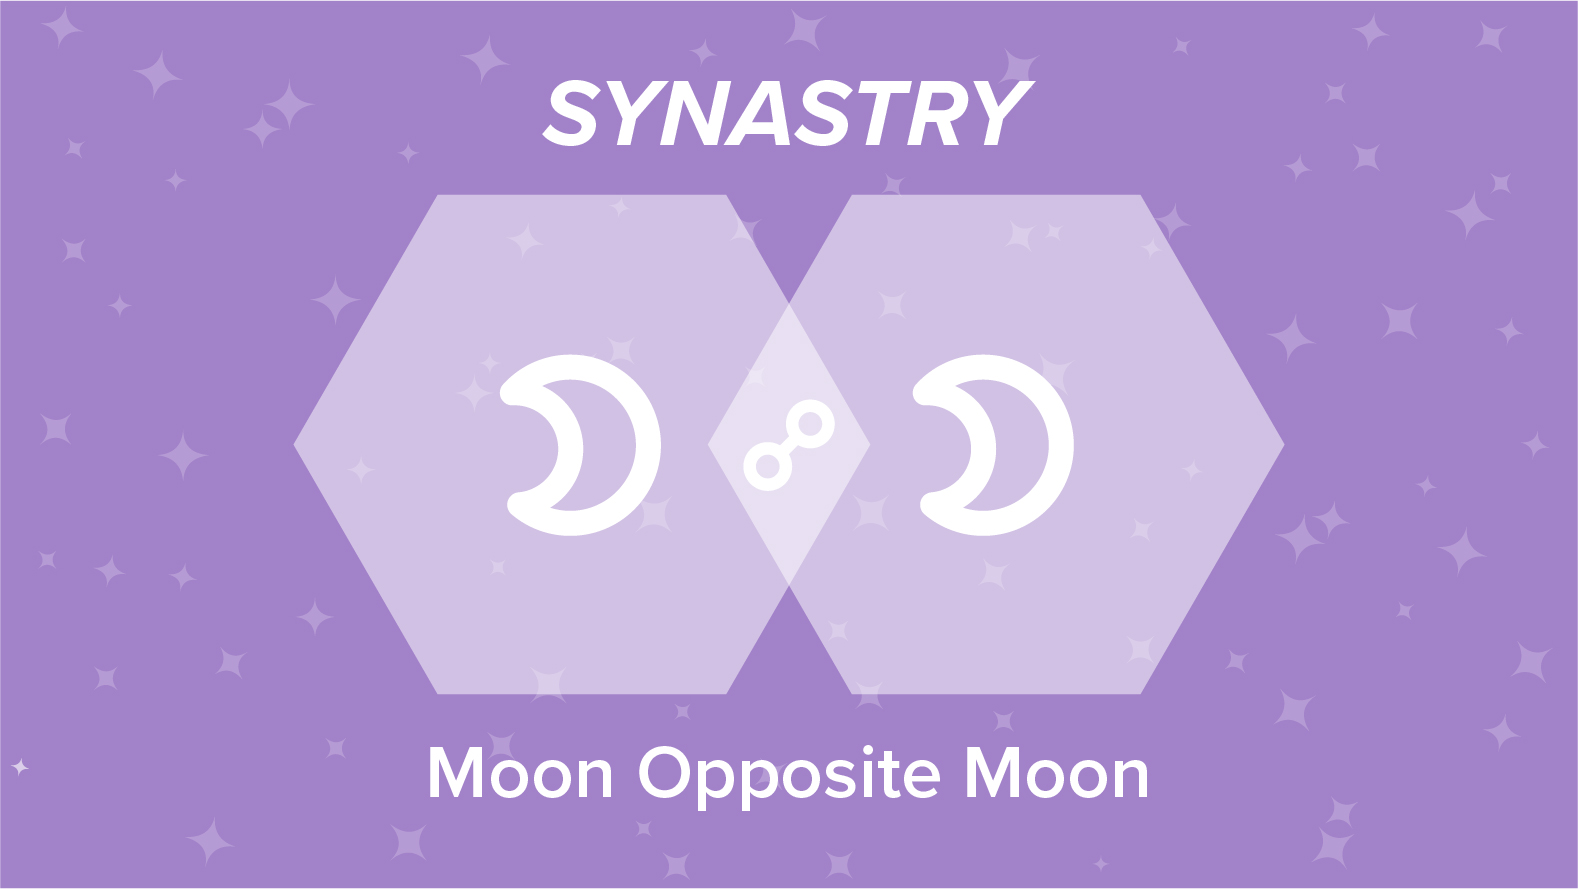 Moon Opposite Moon Synastry